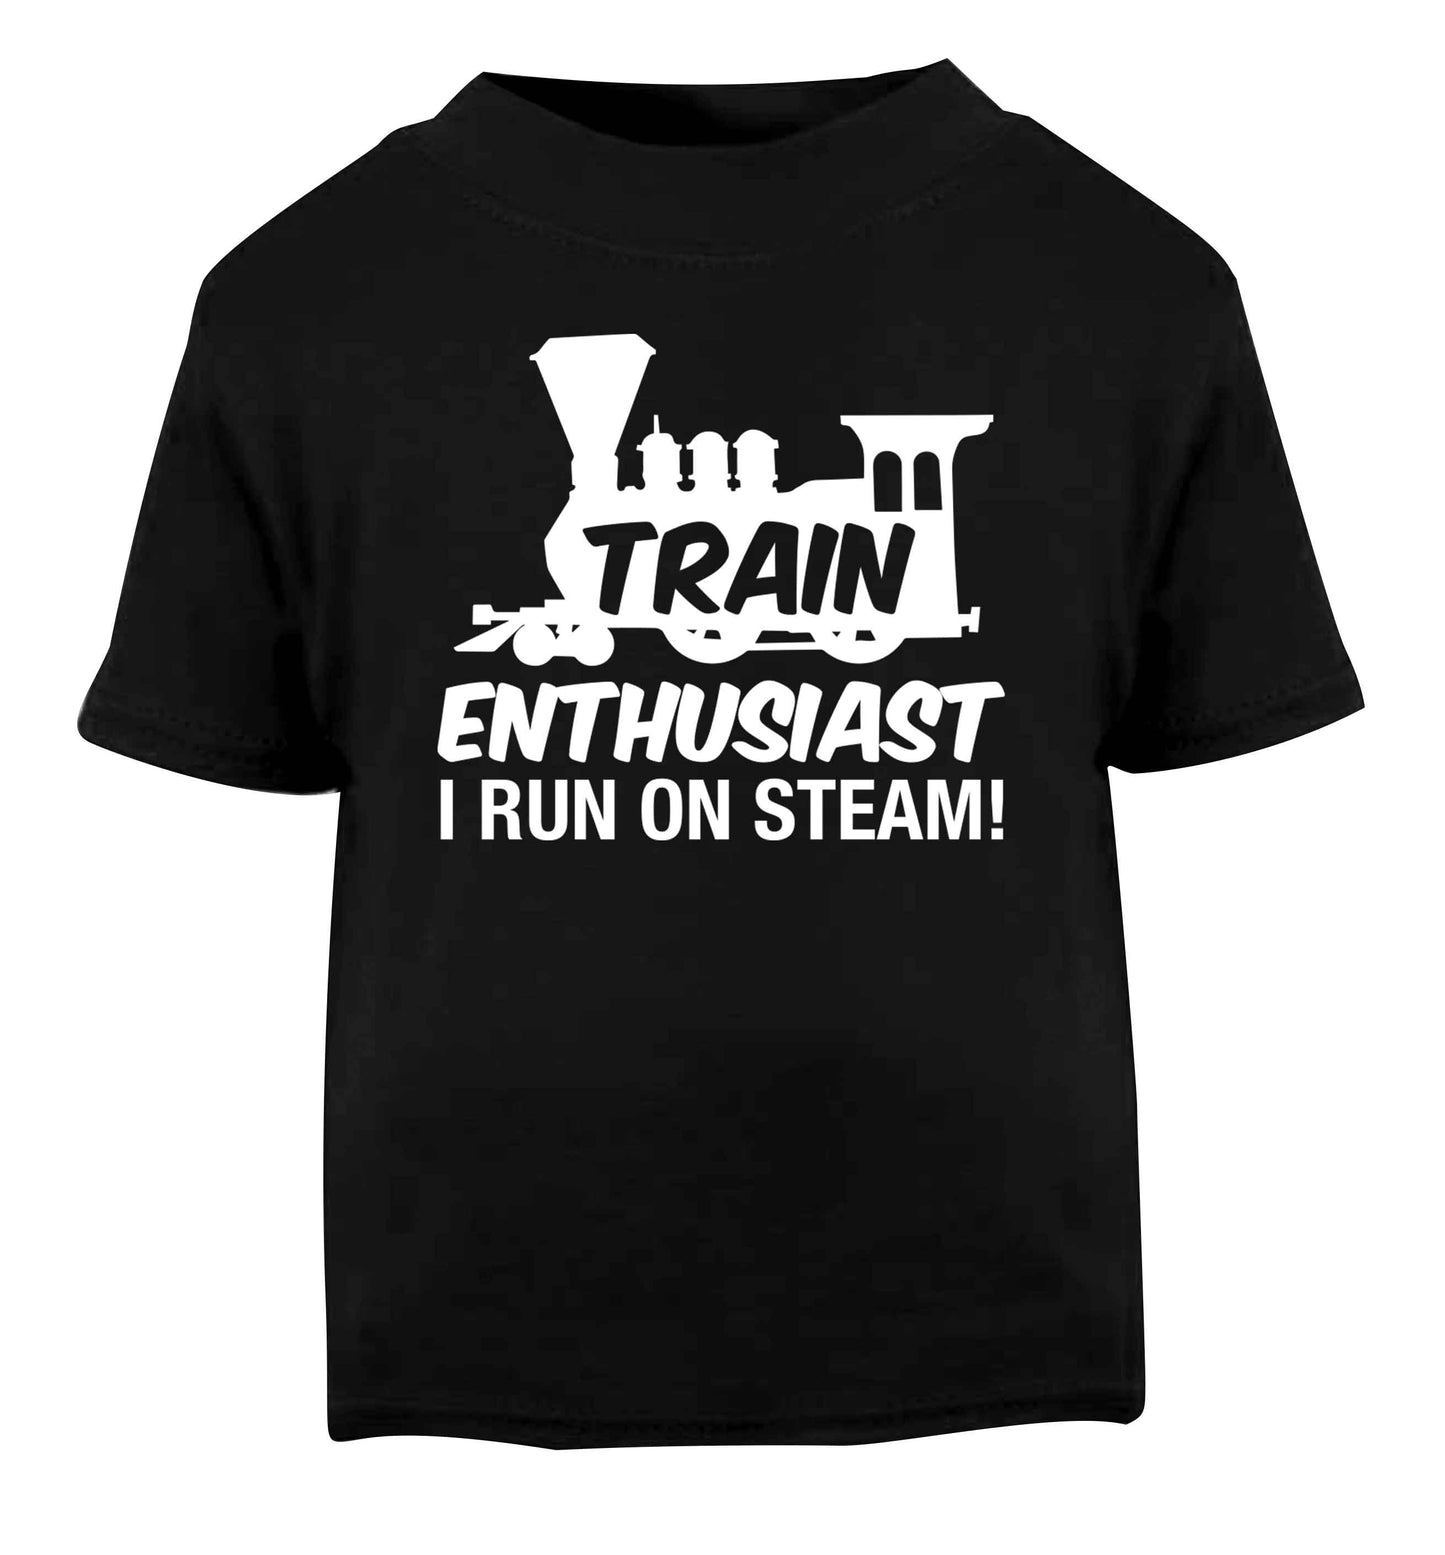 Train enthusiast I run on steam Black Baby Toddler Tshirt 2 years